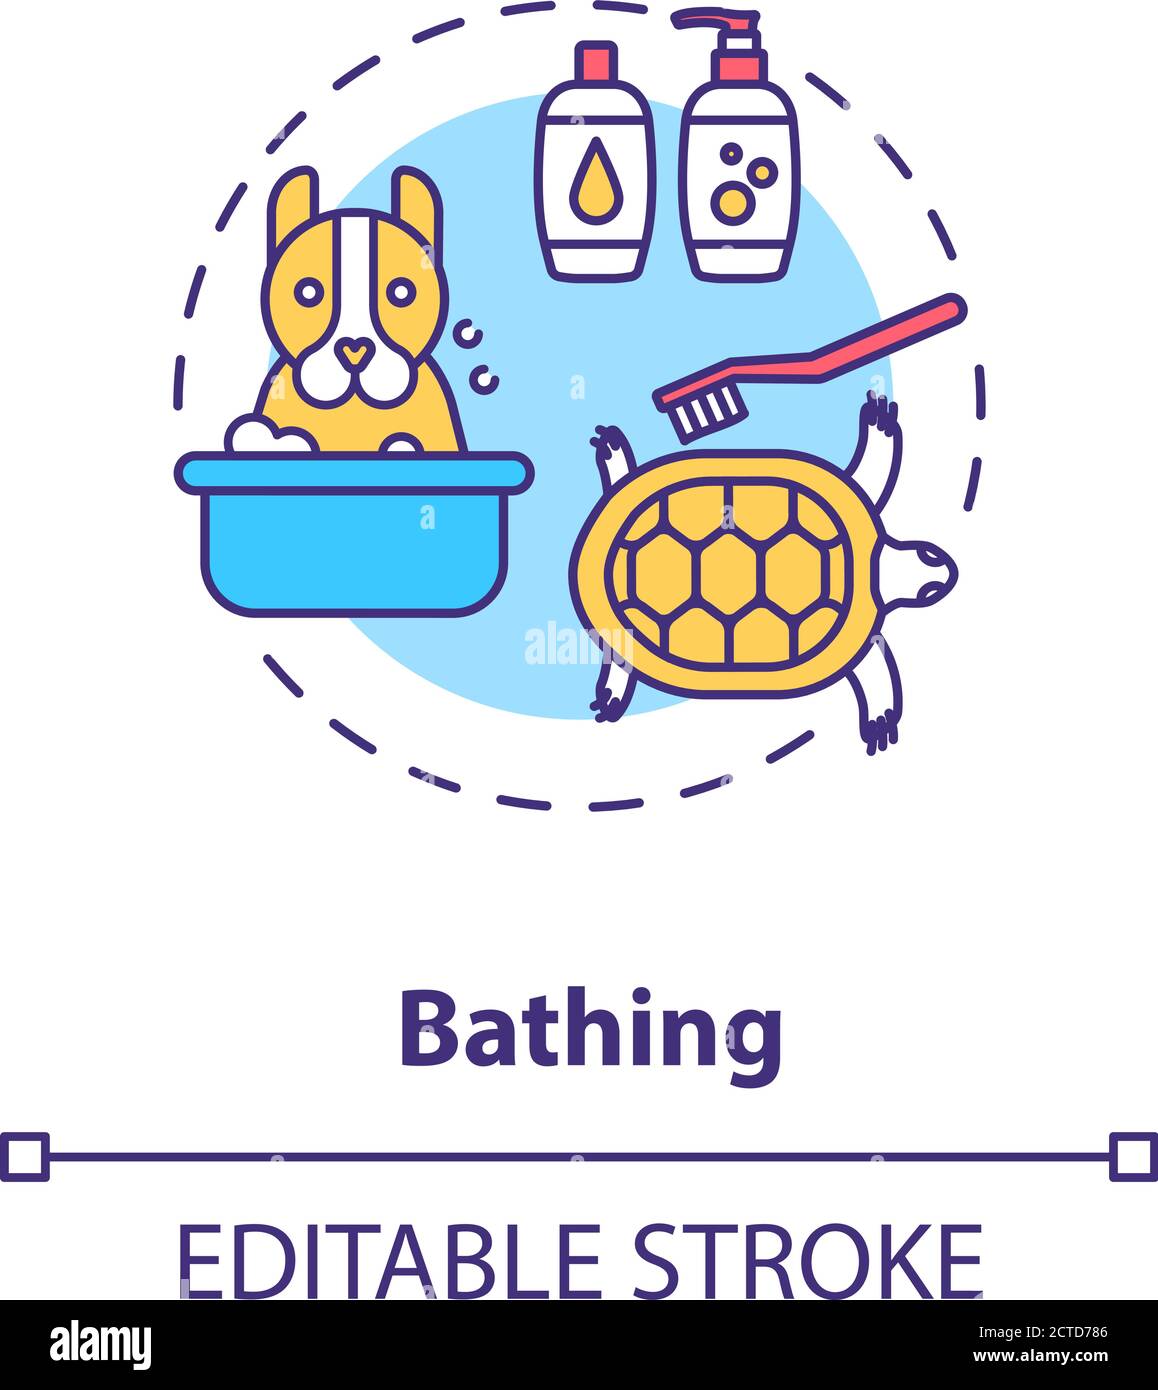 Bathing concept icon Stock Vector